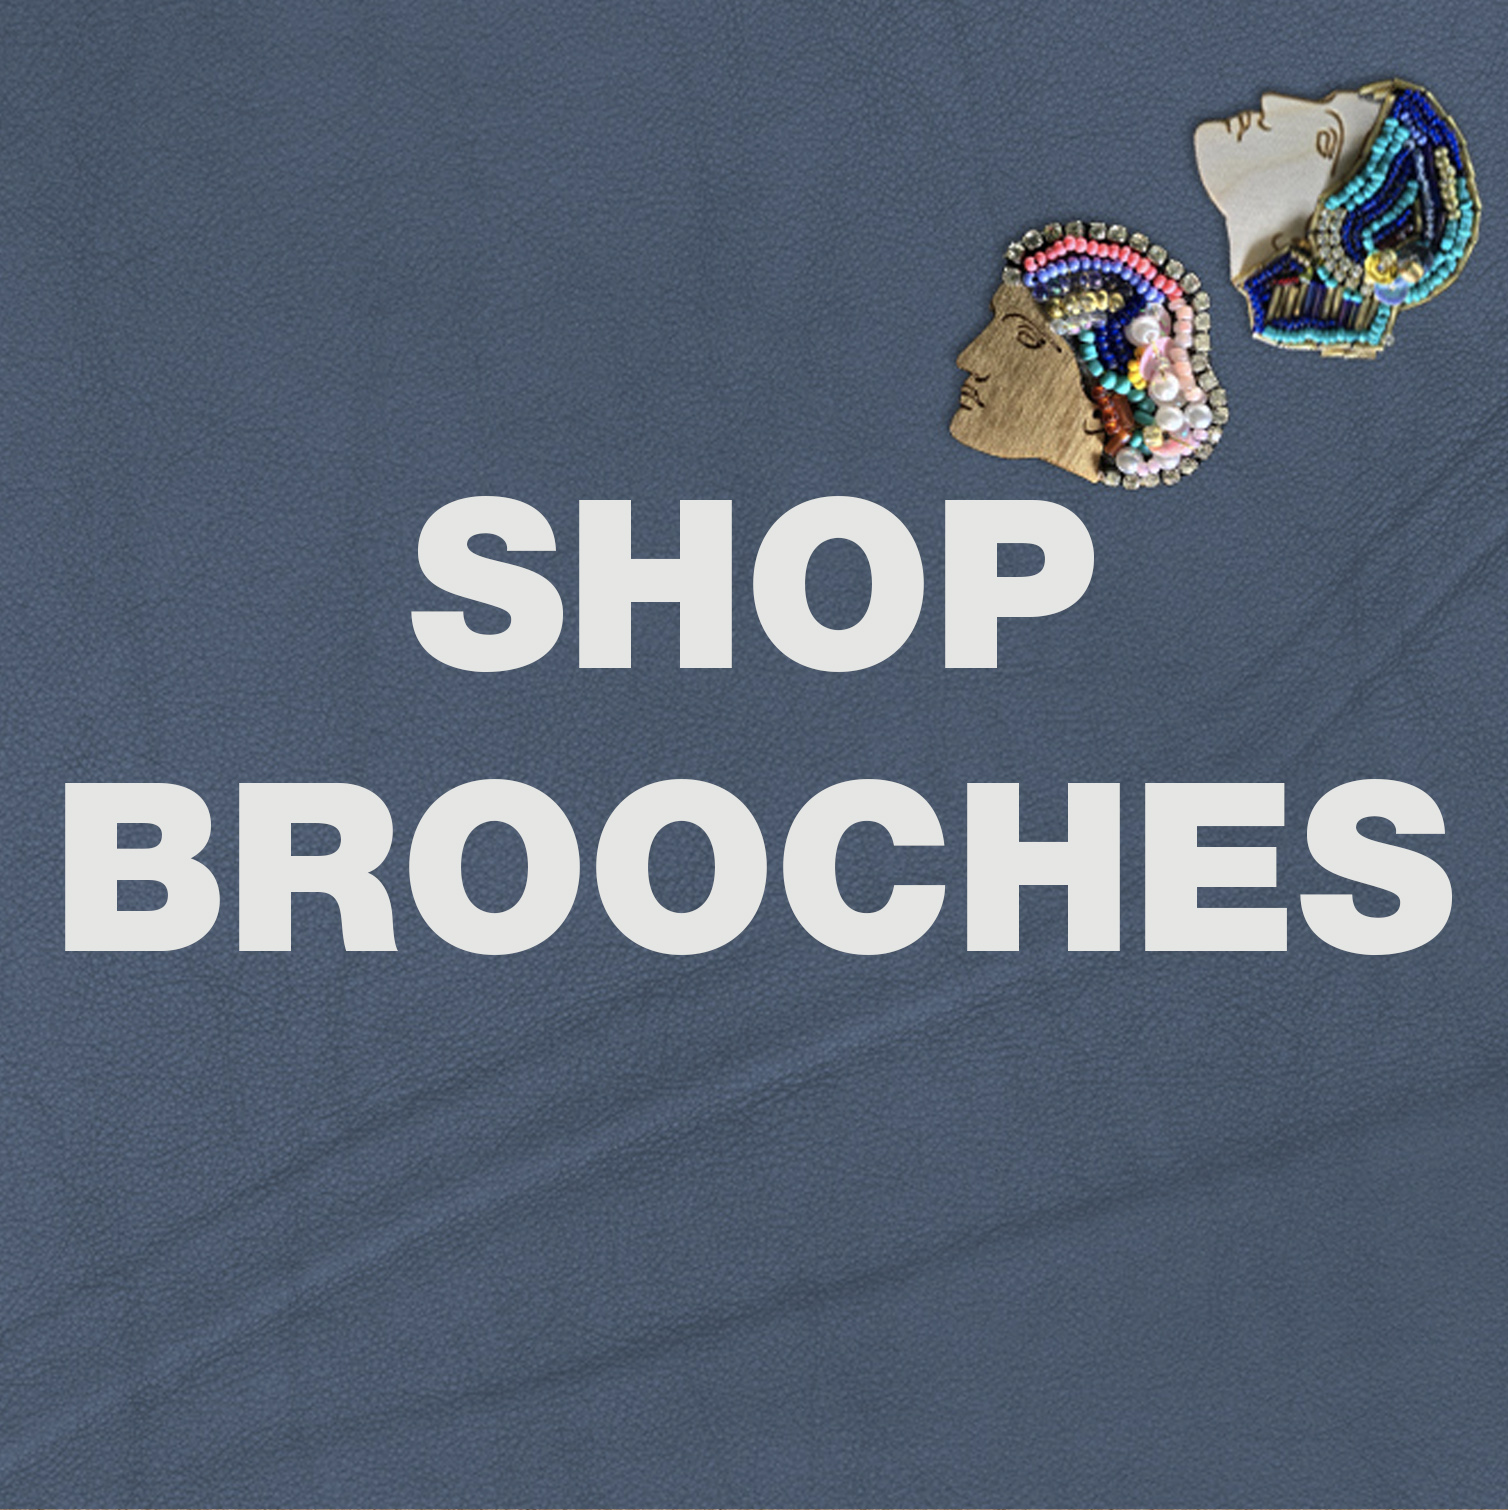 822-shop-brooches.jpg